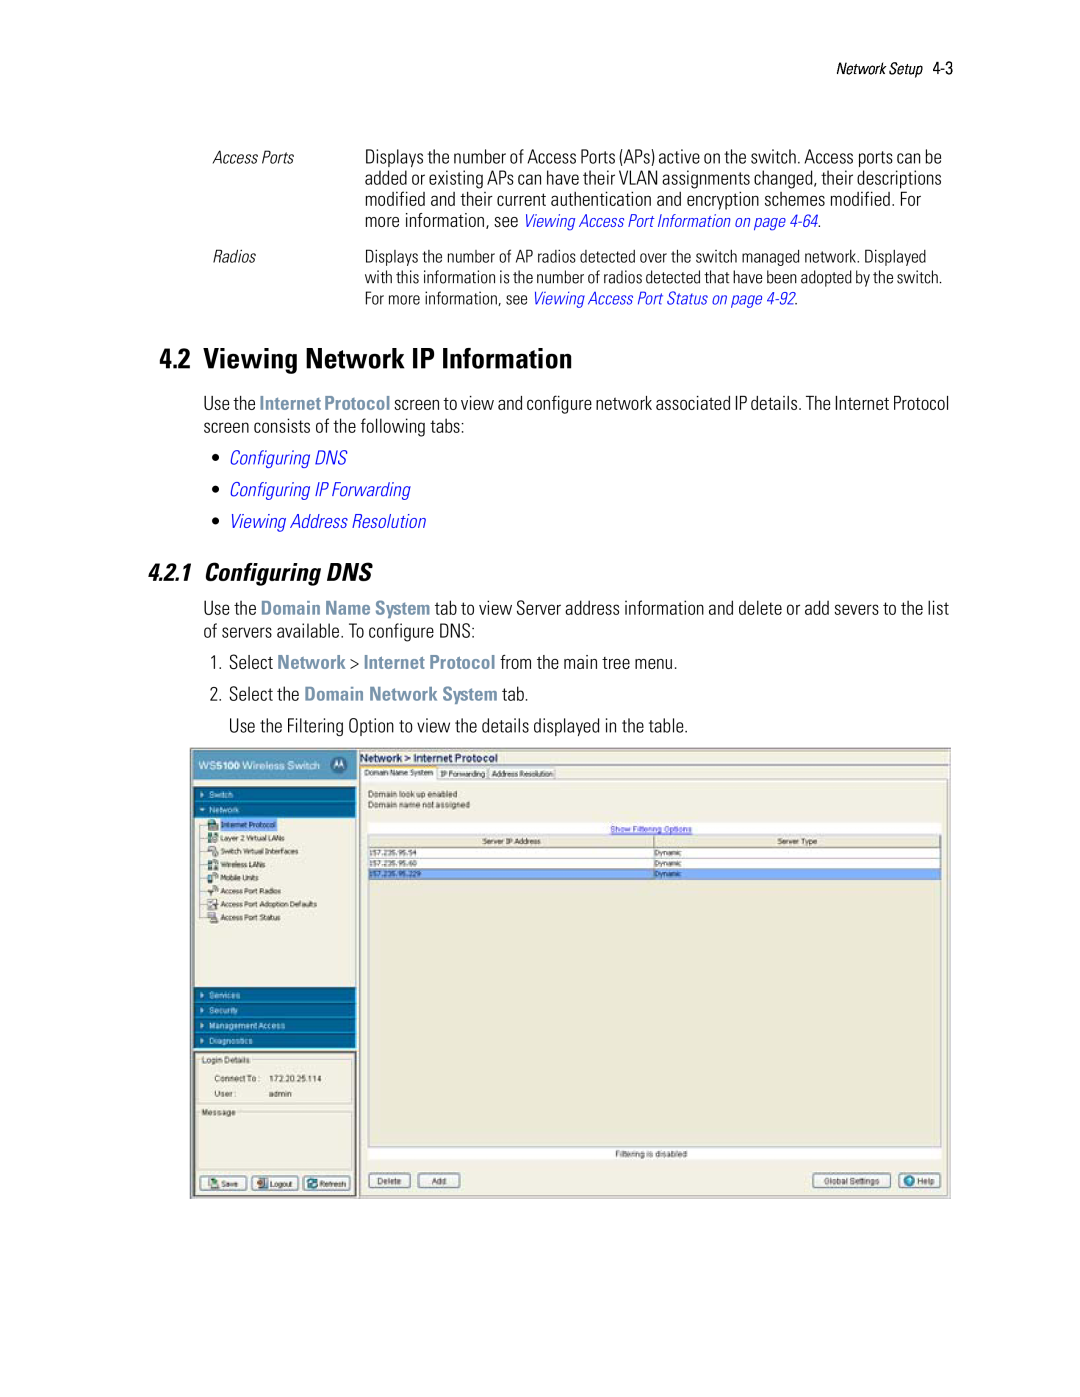 Motorola WS5100 manual Viewing Network IP Information, 4.2.1Configuring DNS, •Configuring DNS •Configuring IP Forwarding 